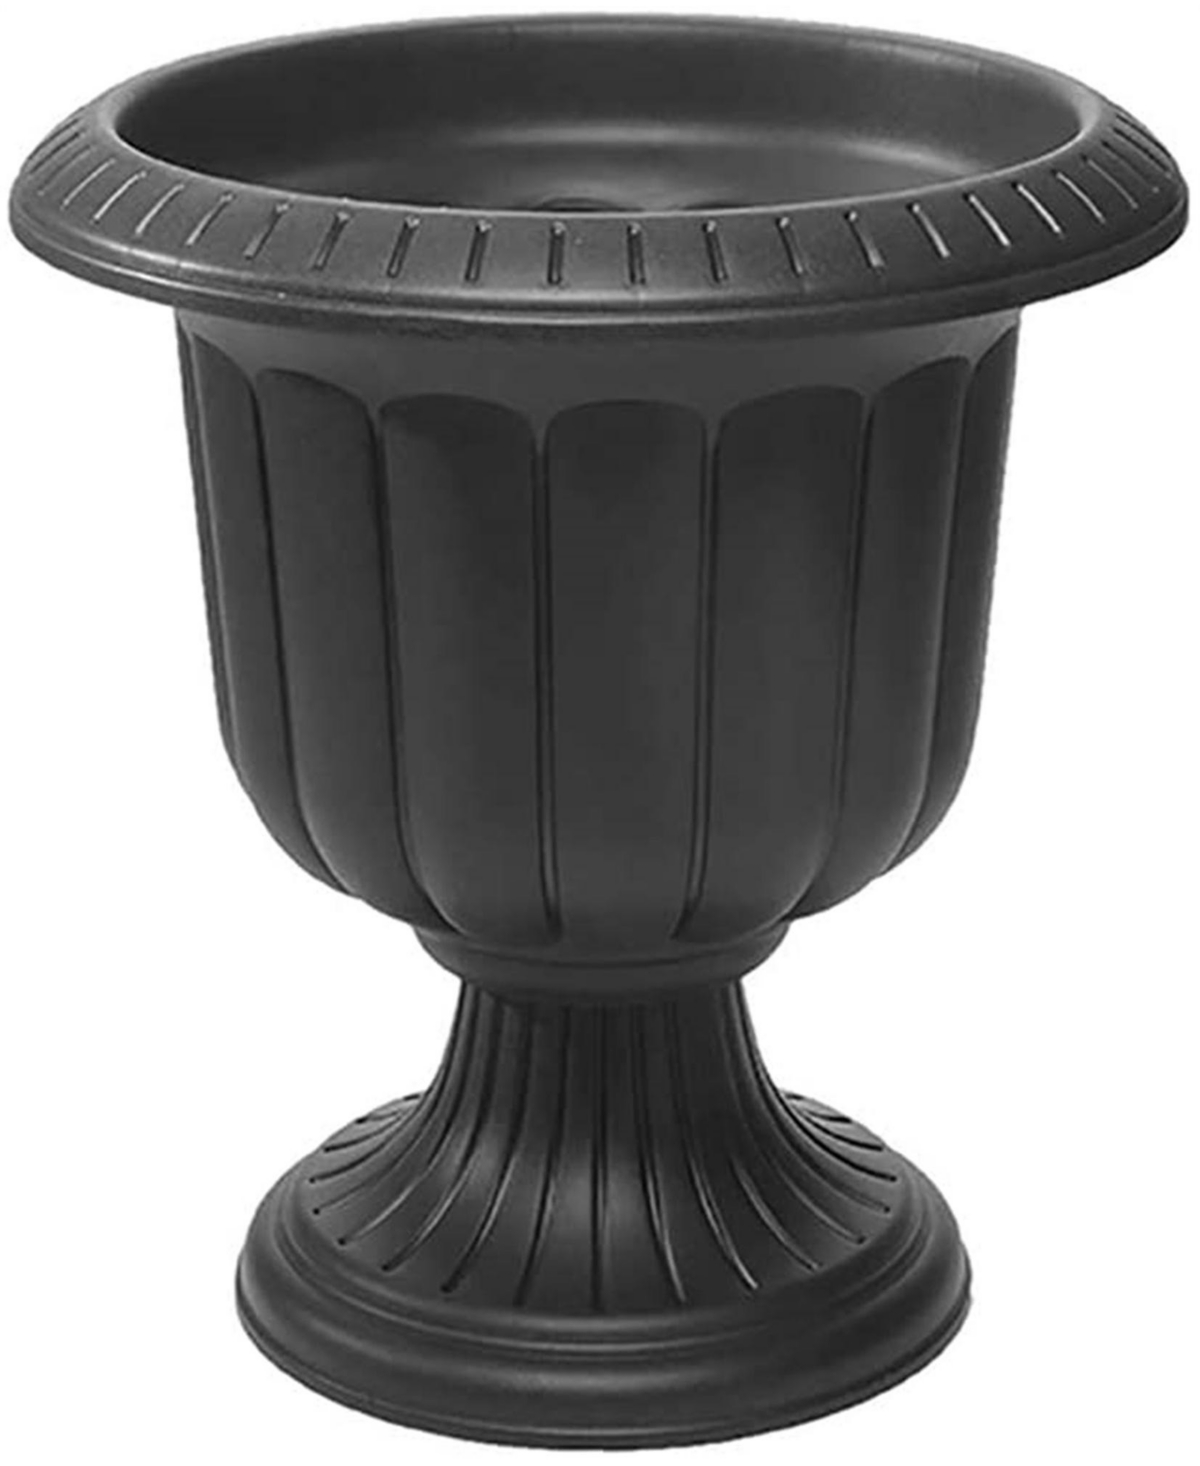 Classic Urn Garden Pot/Planter, Plastic, Black - 19 Inch - Black